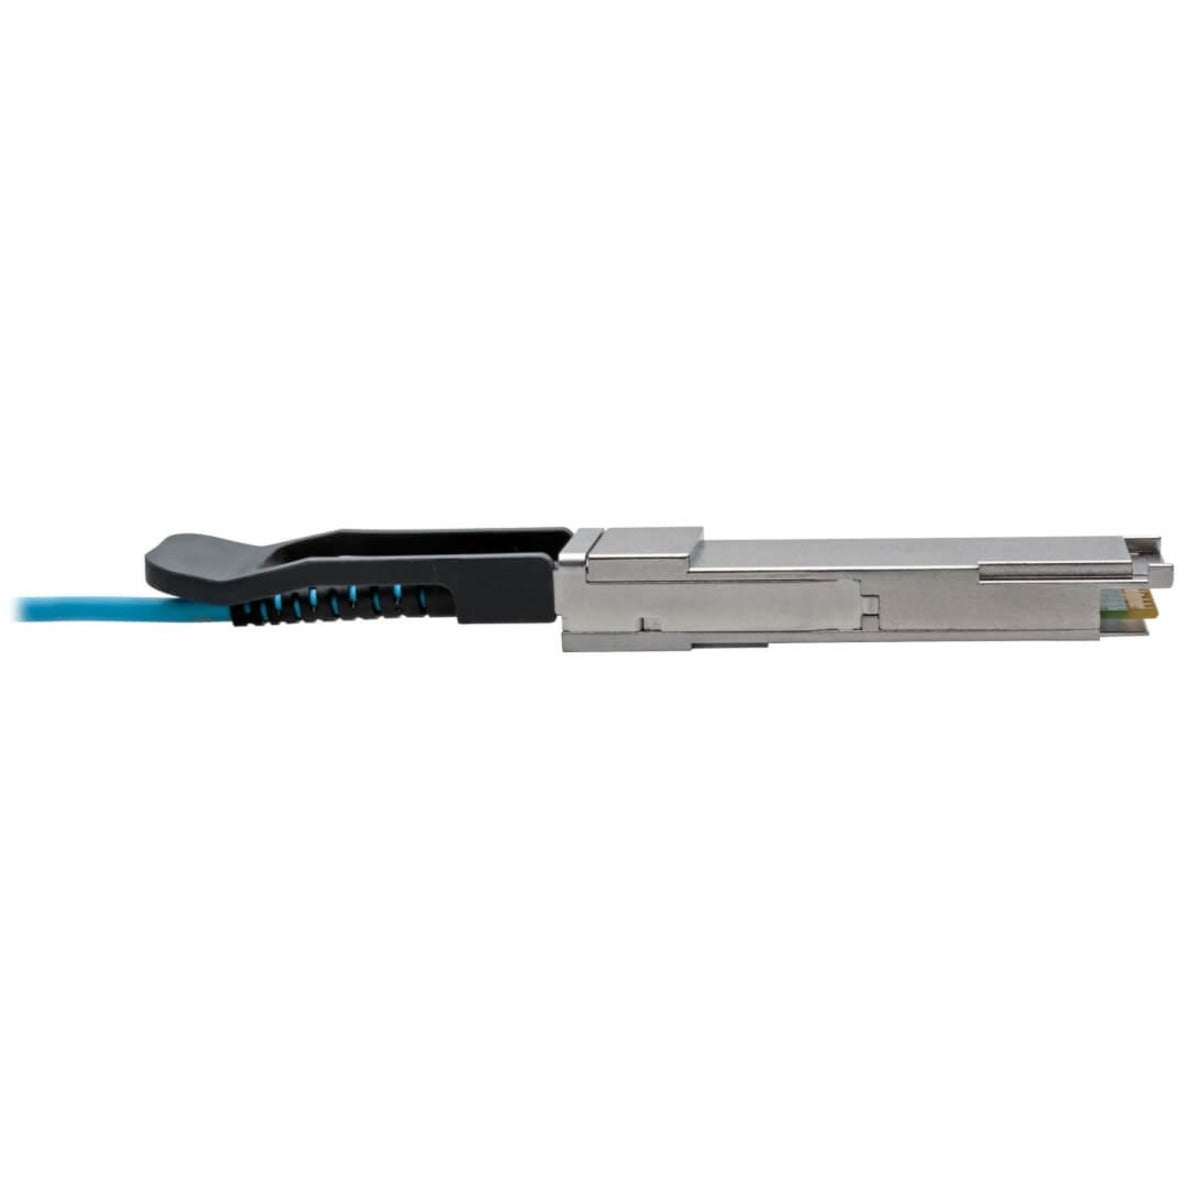 Tripp Lite N28F-10M-AQ QSFP+ to QSFP+ Active Optical Cable 40Gb, Aqua, 10m